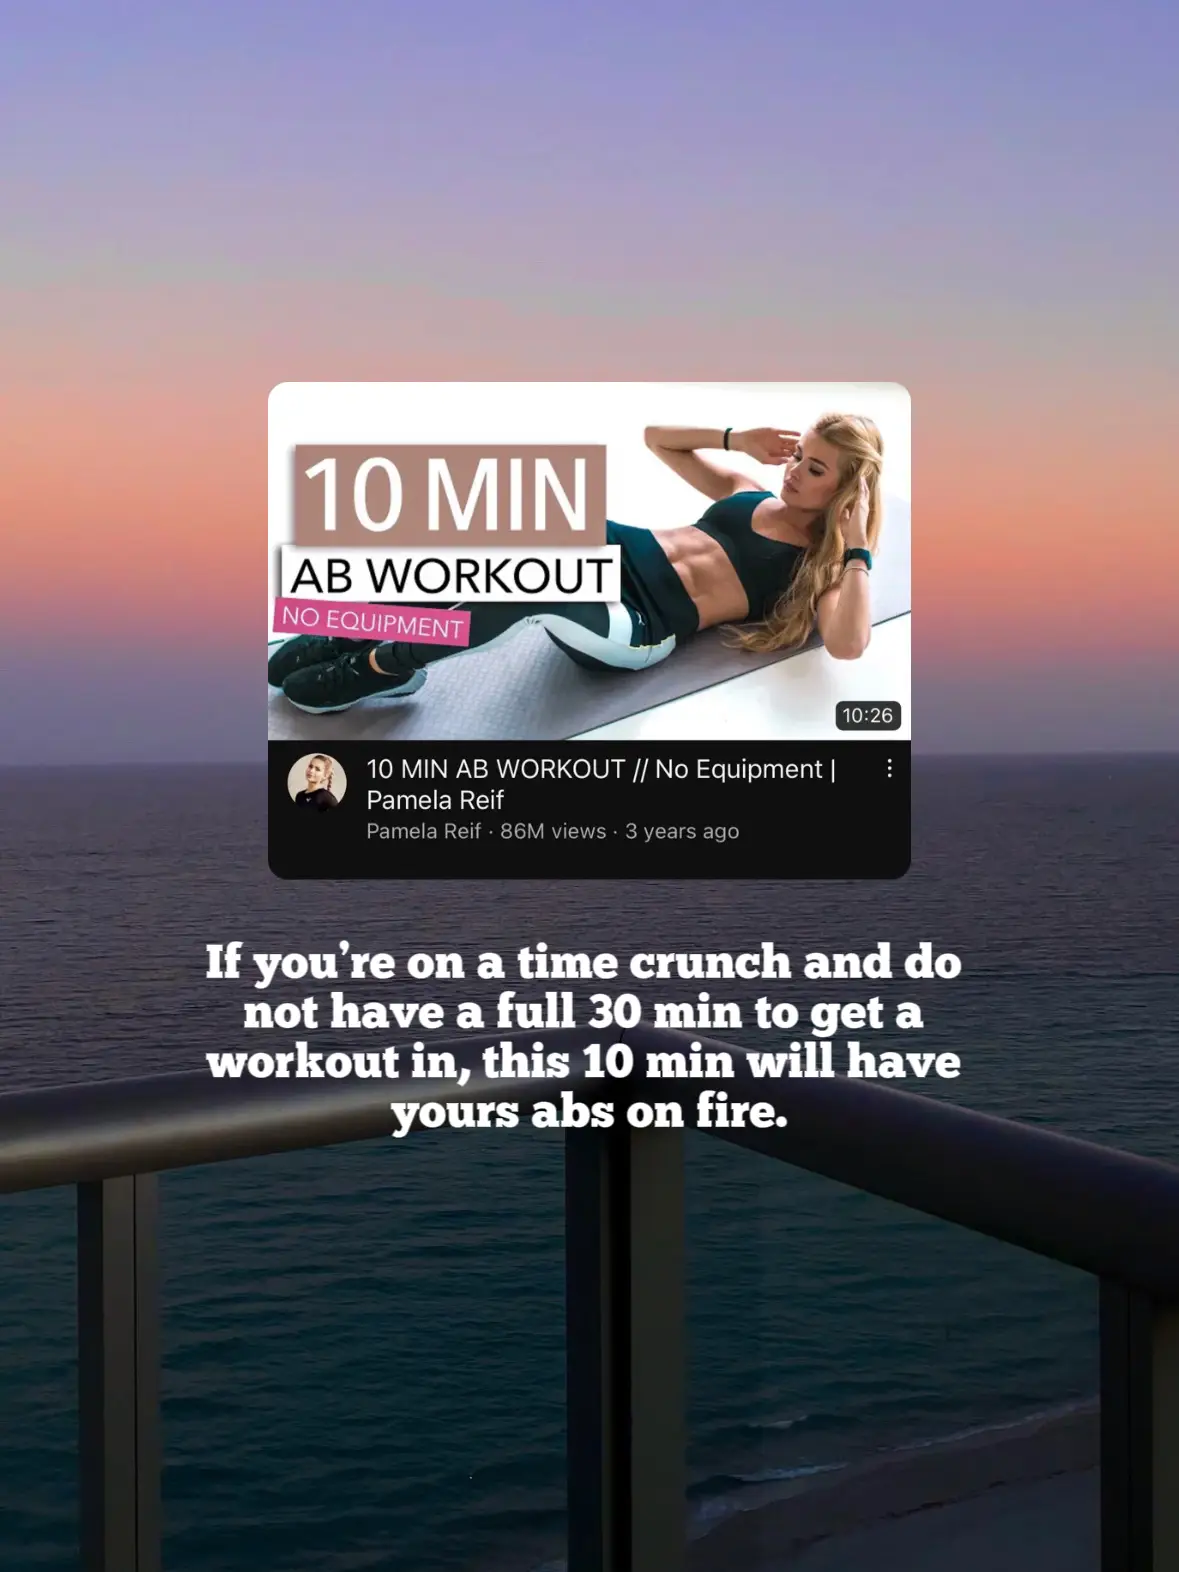 THE CRUNCH 15 Min ABS Workout / No Equipment - Caroline Girvan 